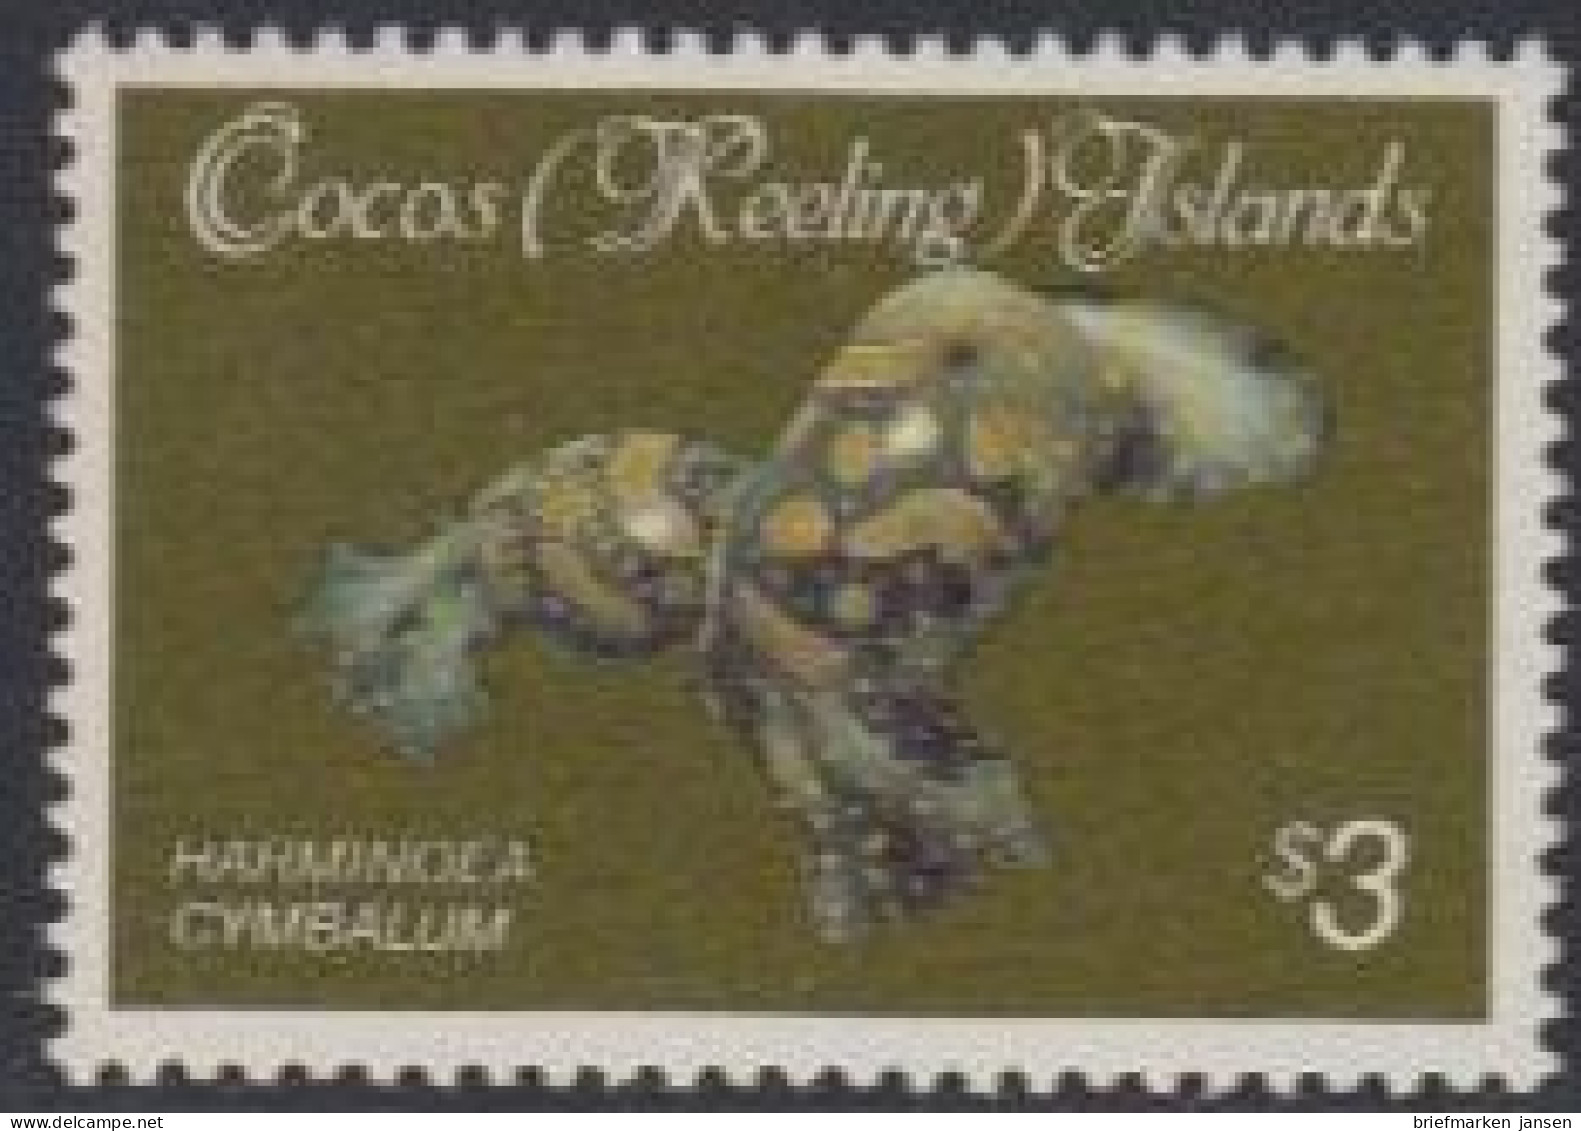 Kokos-Inseln Mi.Nr. 155 Freim. Muscheln+Schnecken, Harminoea Cymballum (3) - Cocos (Keeling) Islands